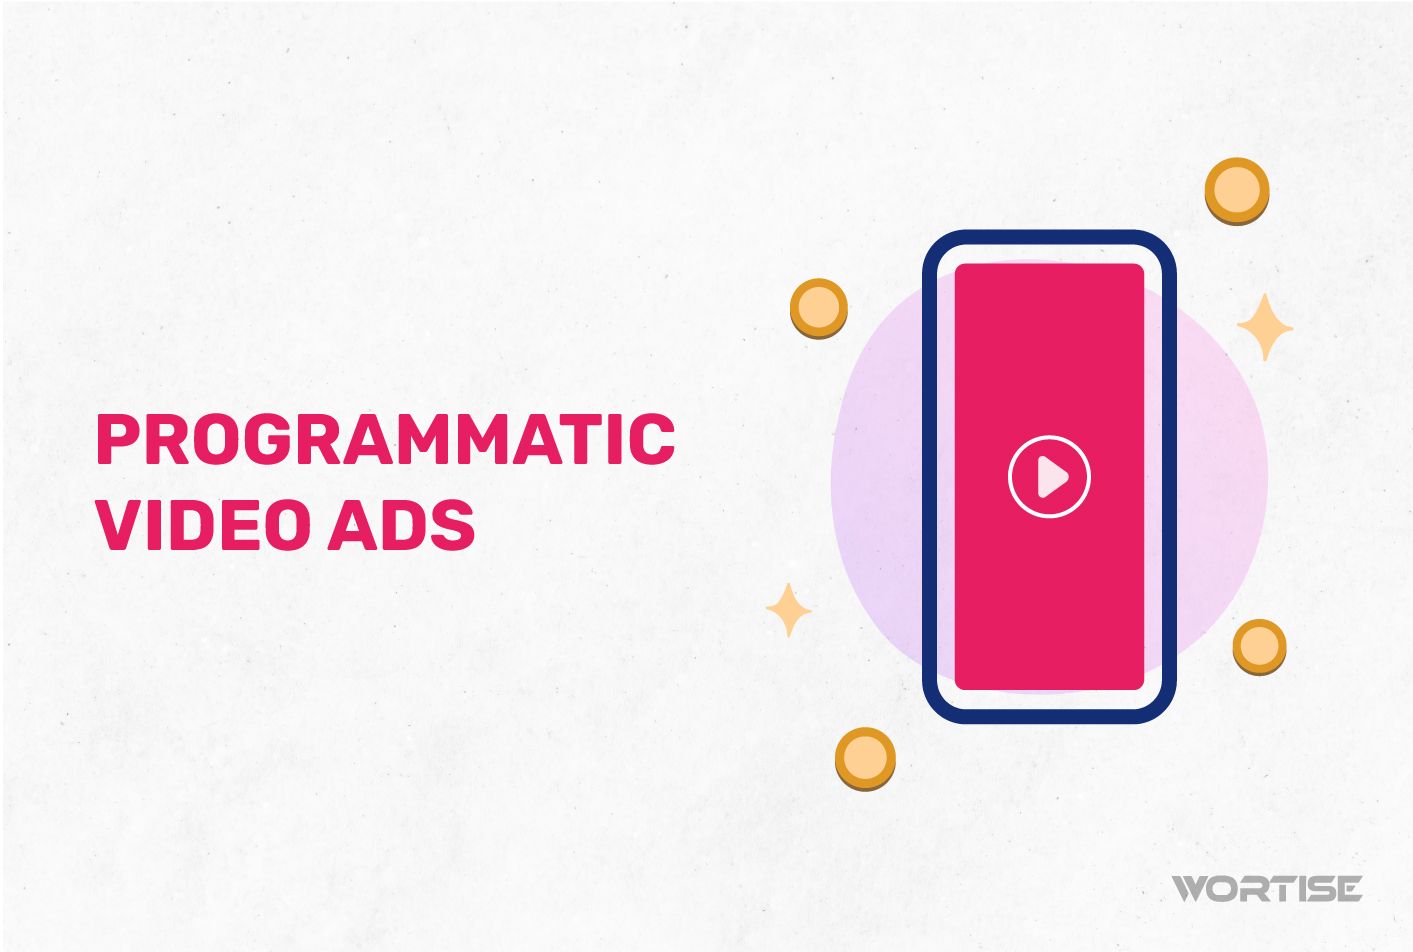 Video killed the revenue star: 9 tips para monetizar más con programmatic video ads